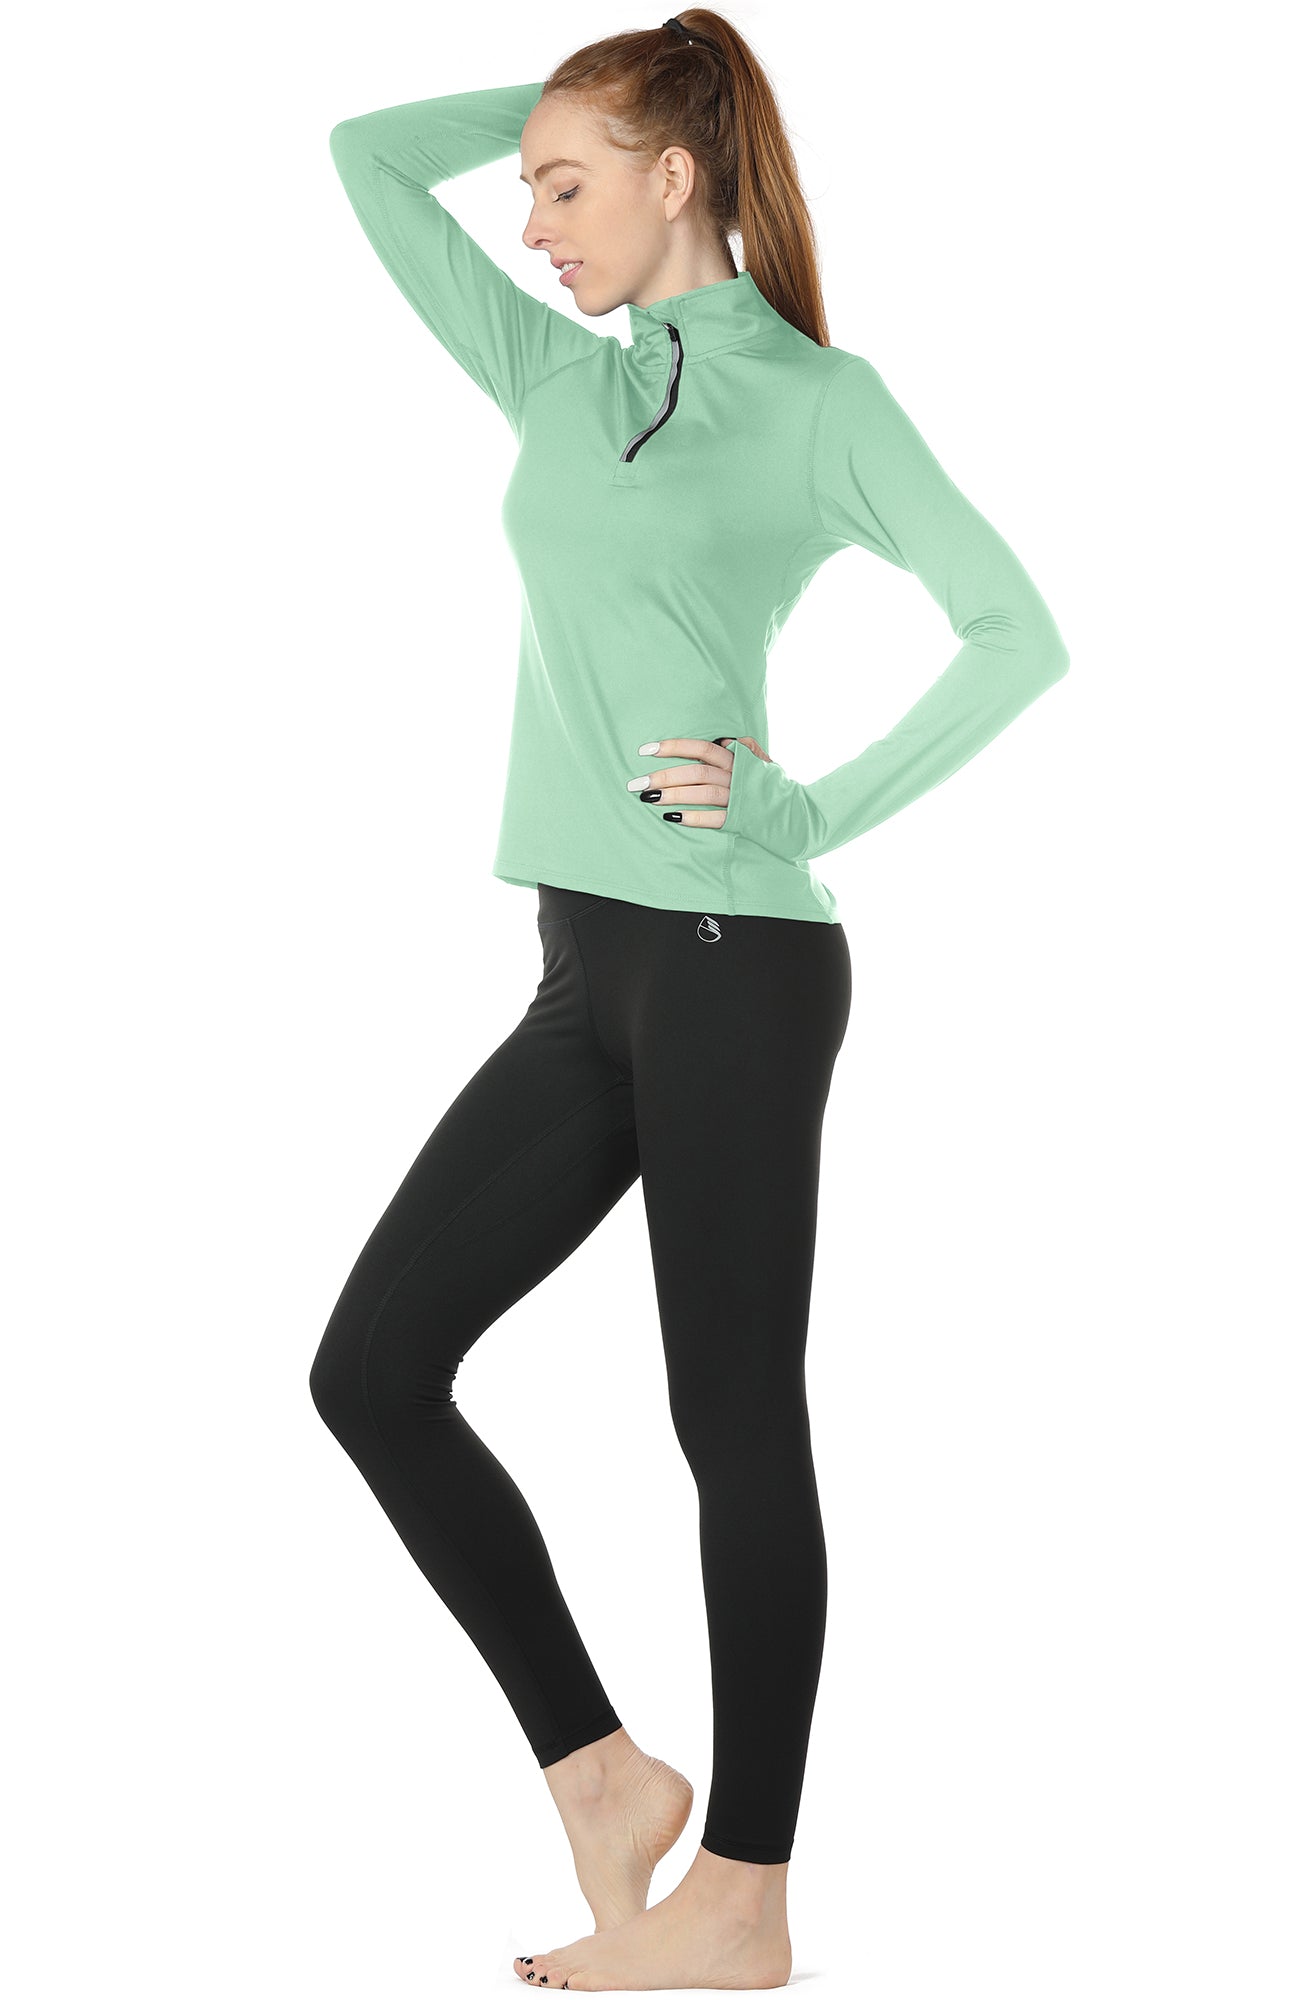 Women's Short Sleeve Pullover, Best Yoga, Sports, Workout, Running